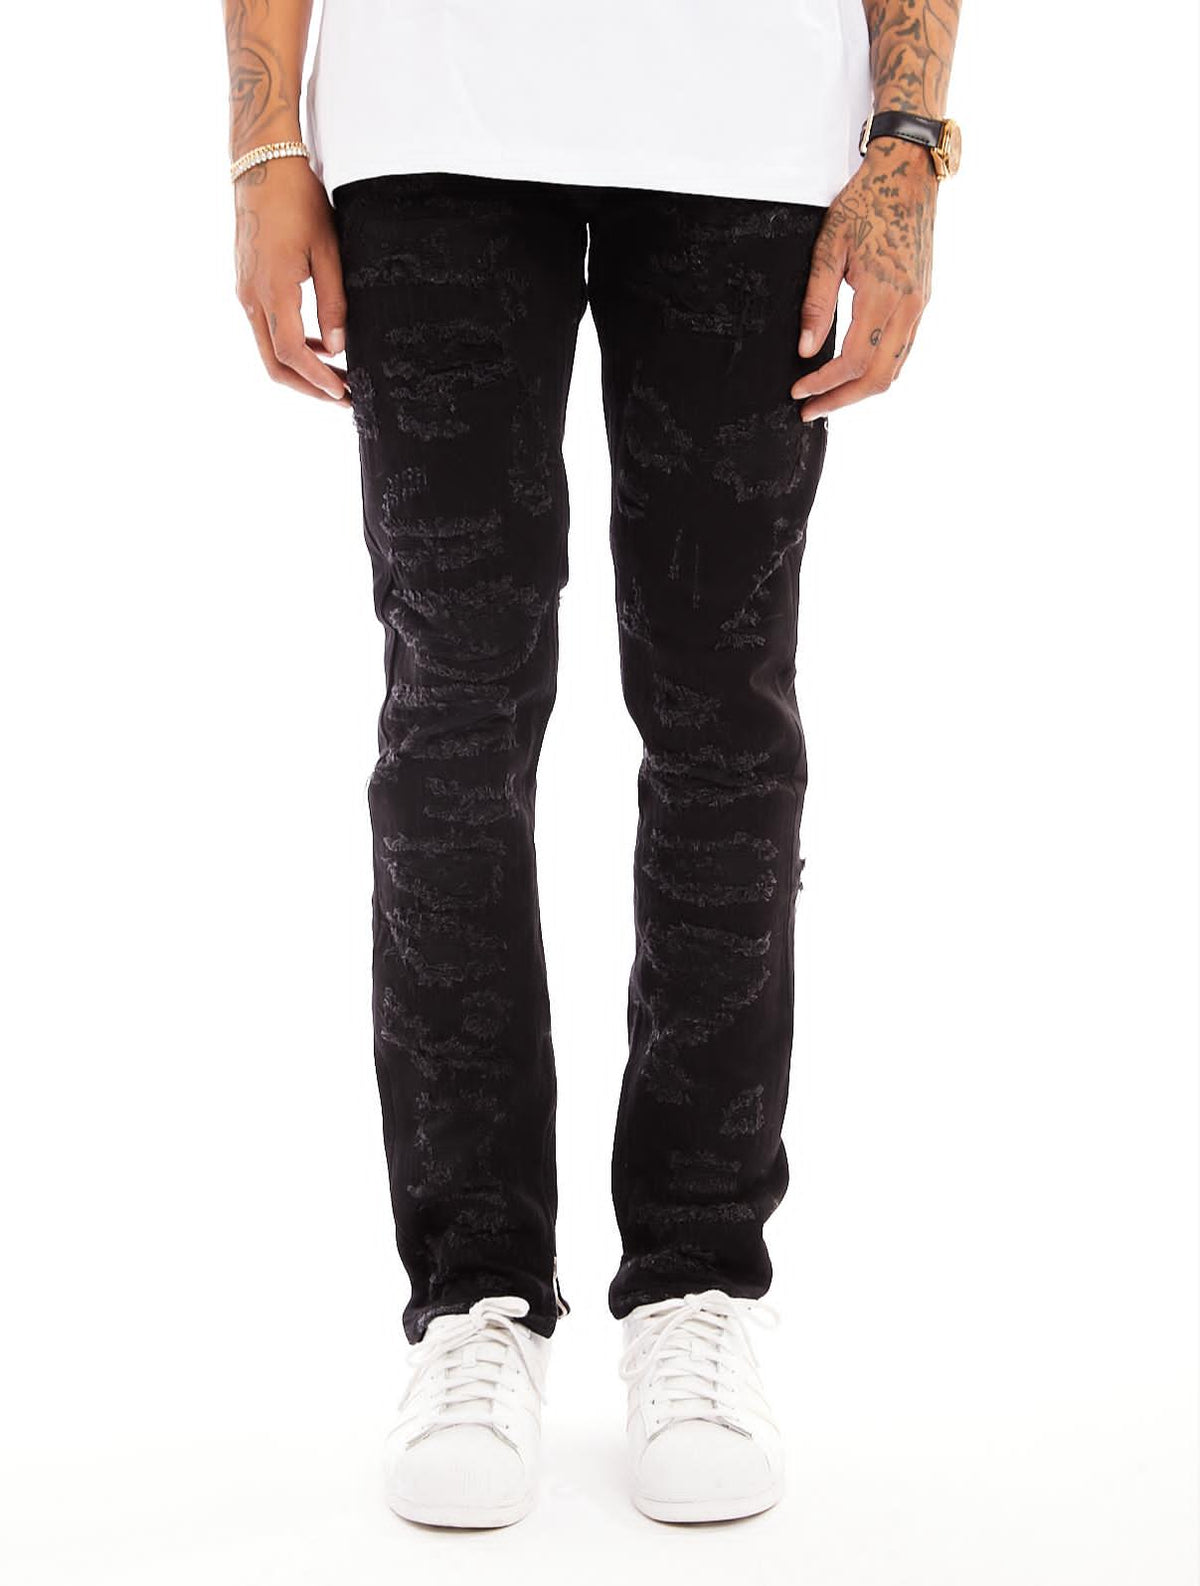 Damati-Distressed Denim Jeans-Black(DMT-7-5)